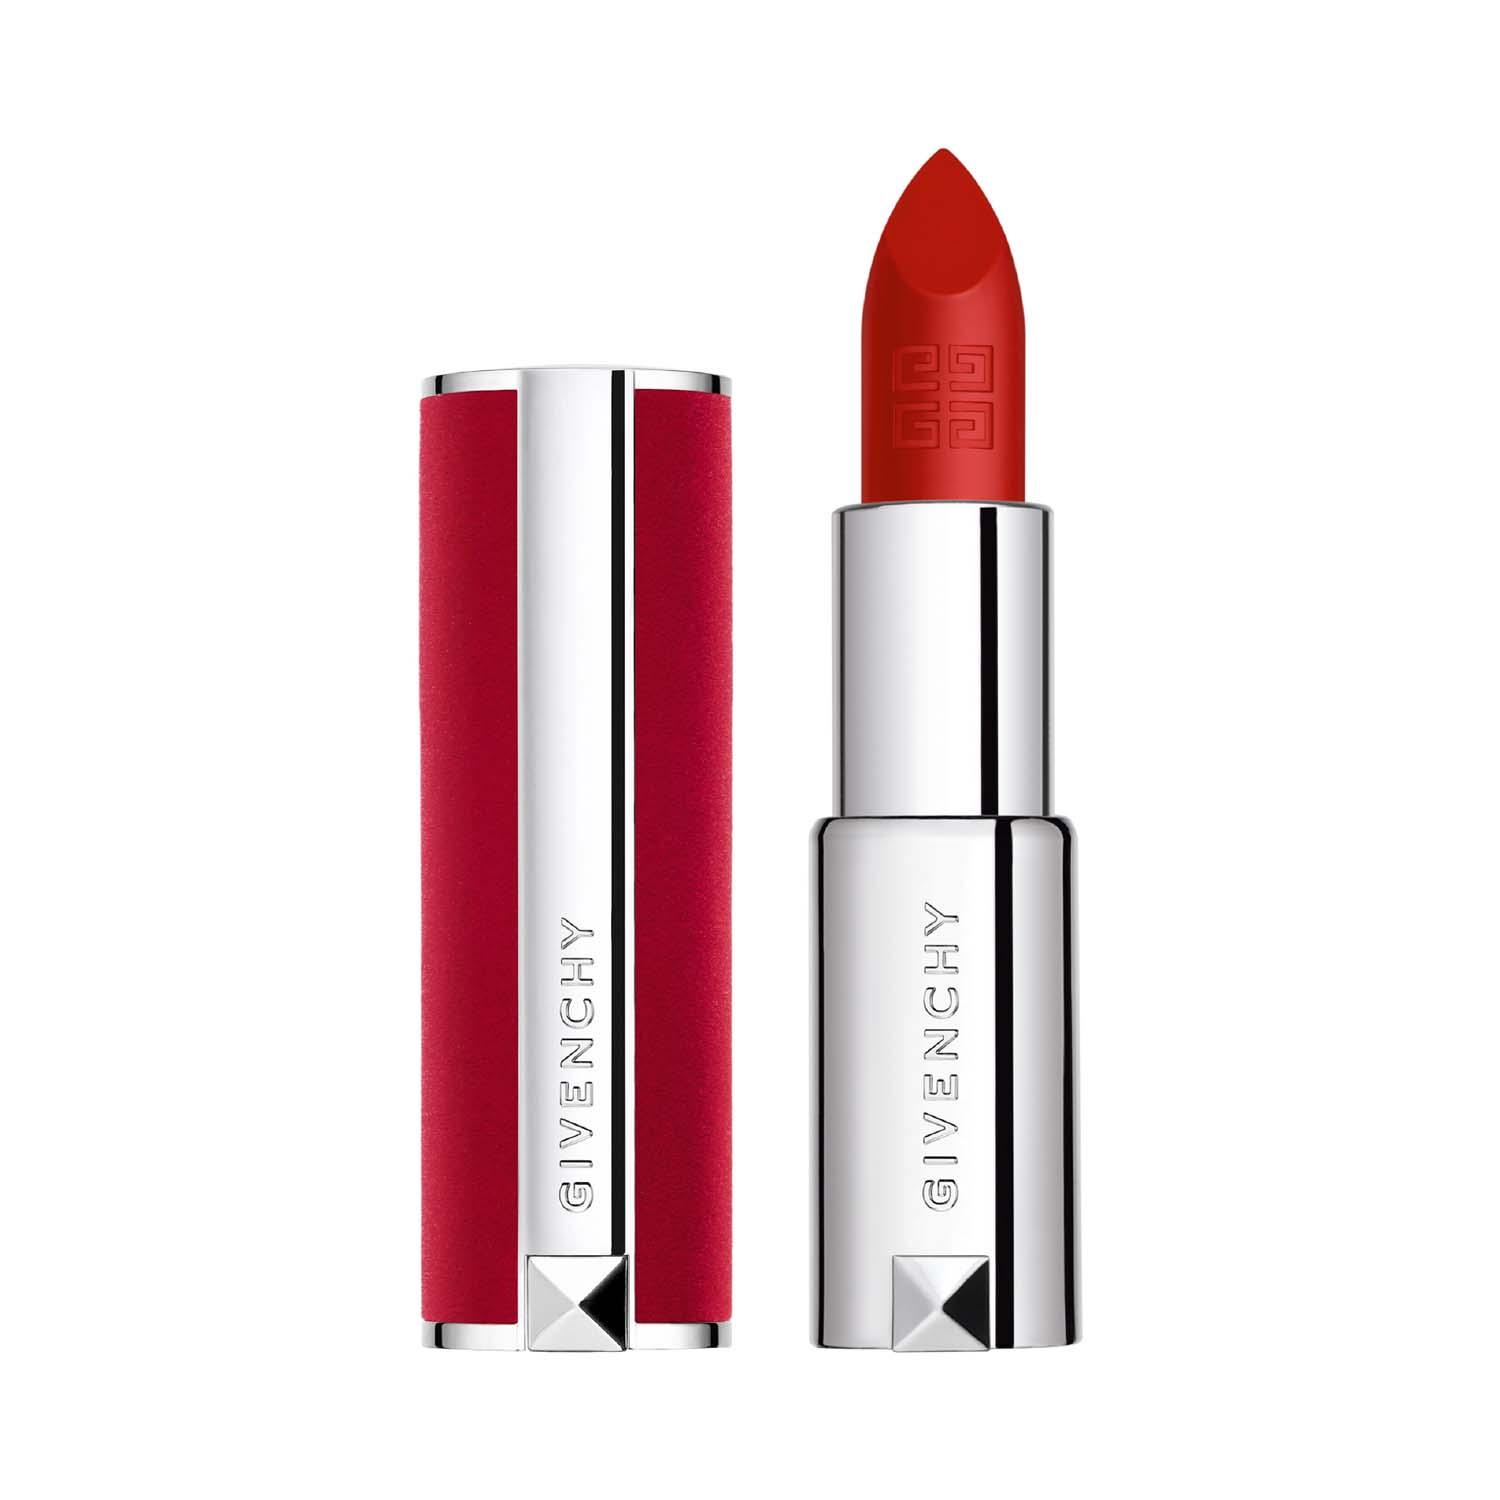 Givenchy | Givenchy Le Rouge Deep Velvet Lipstick - N36 R1 (3.4g)